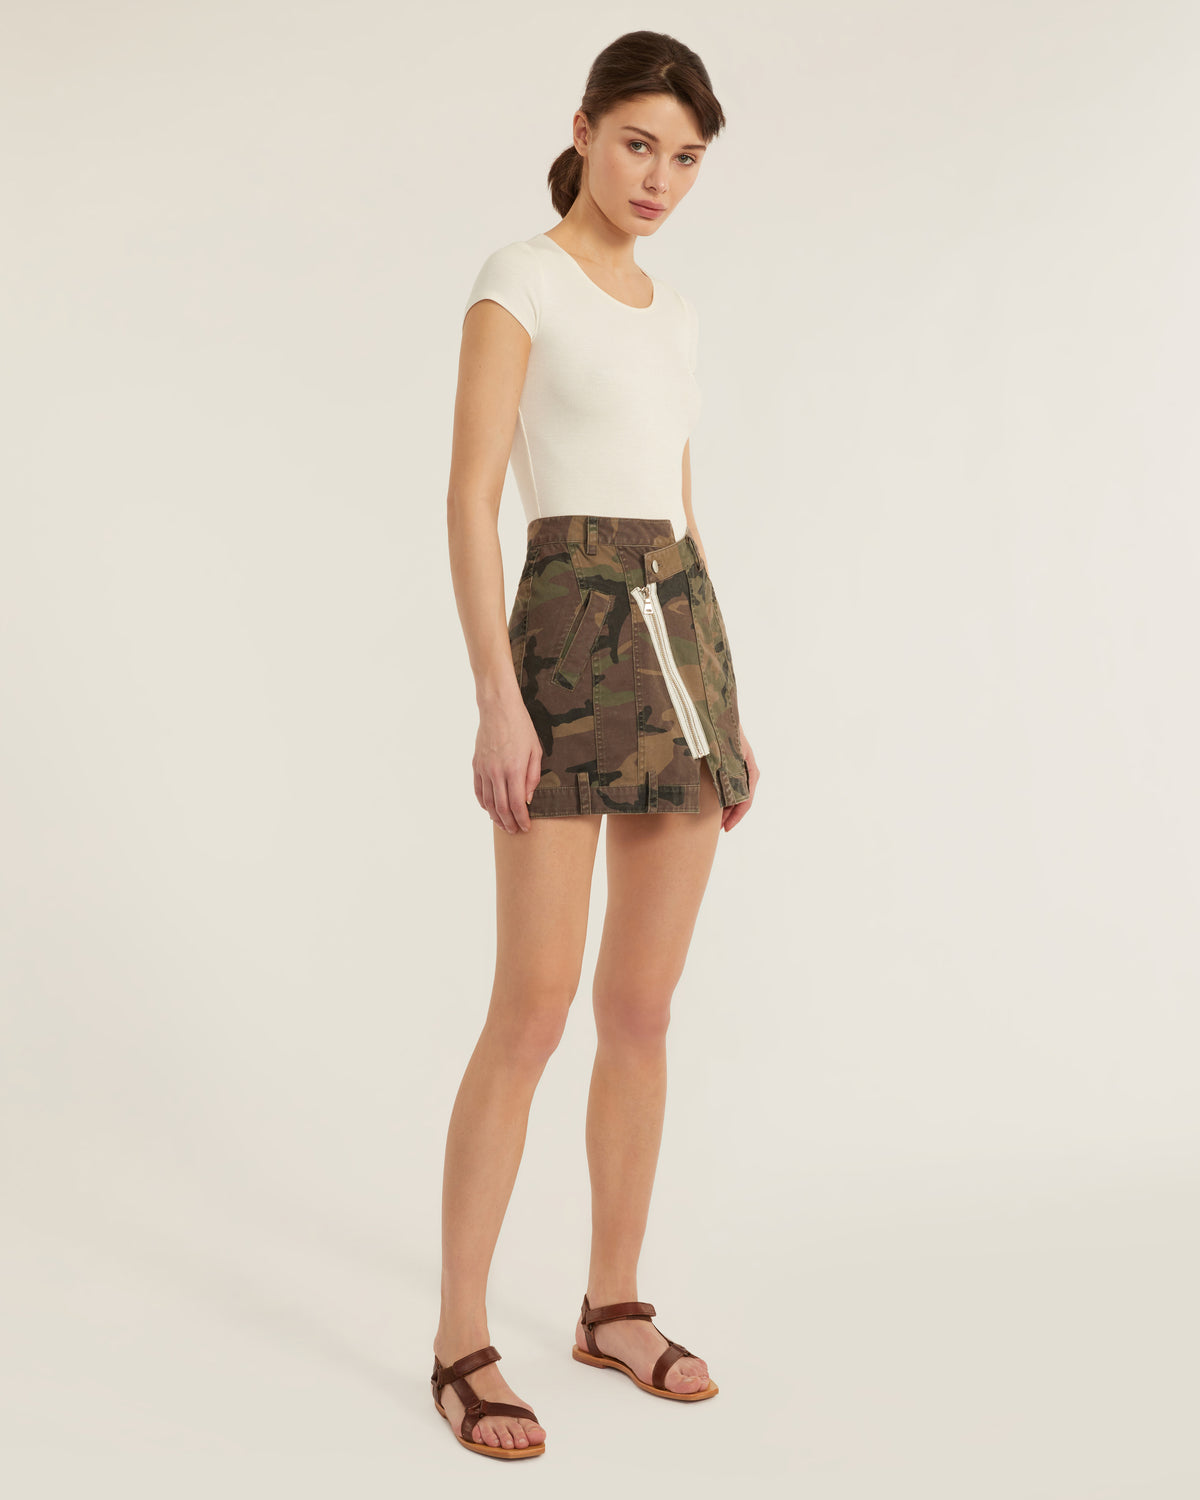 Eliza Canvas Zip Front Camo Skirt in Woodland Camo